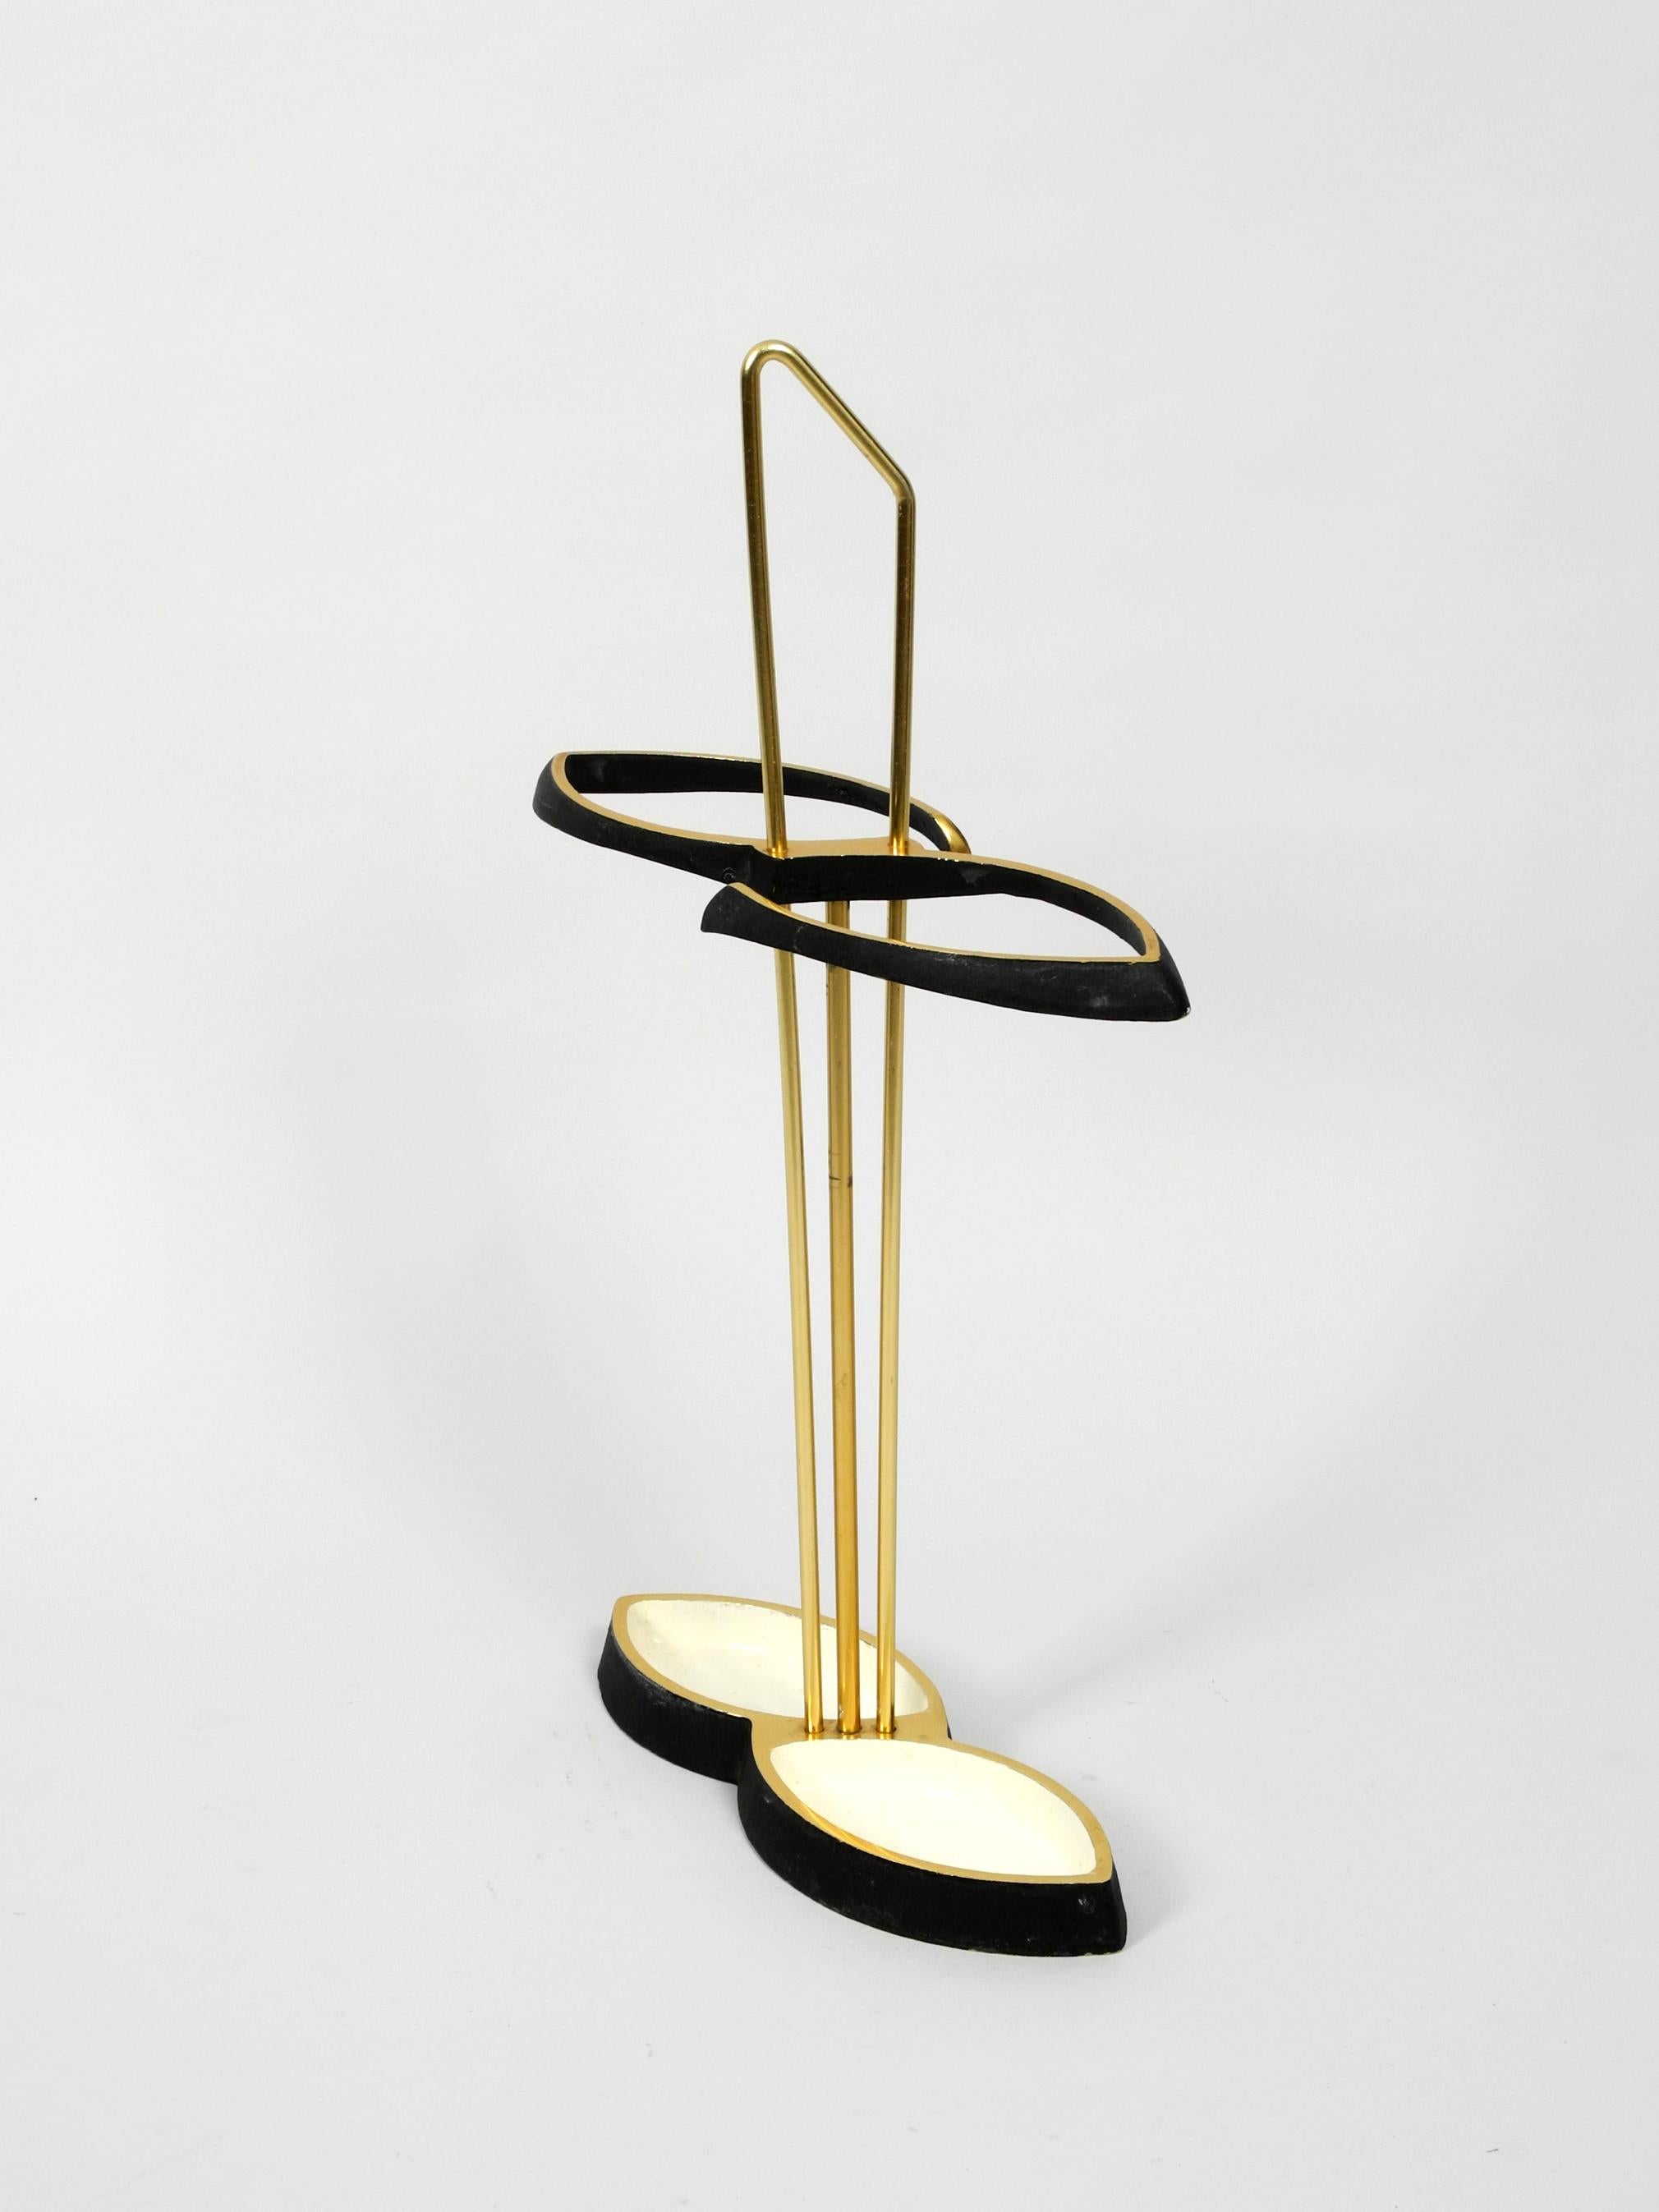 German Very Unusual Mid-Century Modern Brass Umbrella Stand